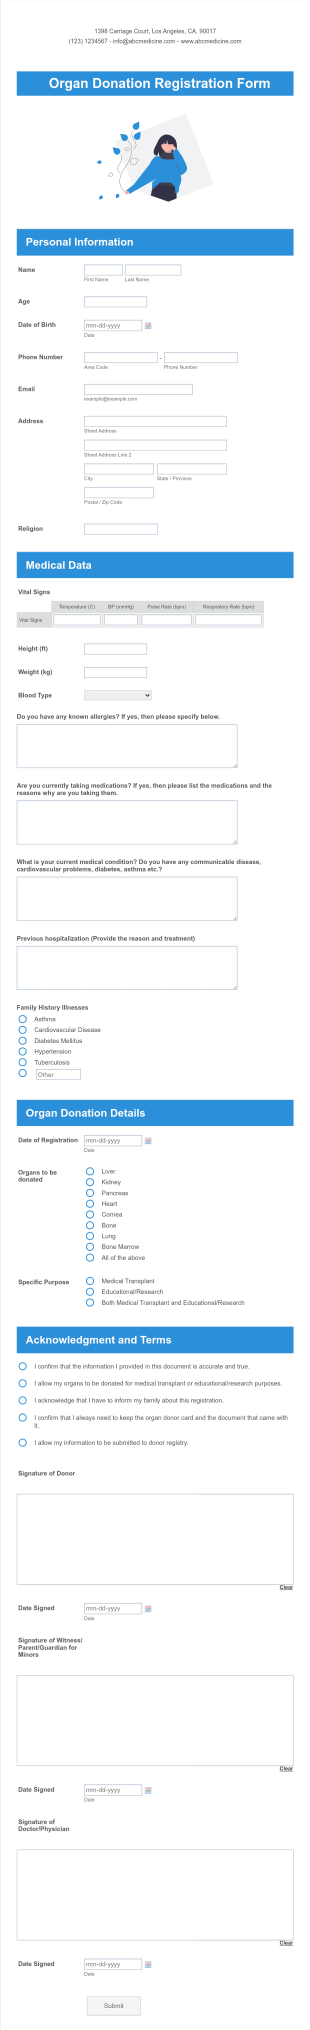 Organ Donation Registration Form Template